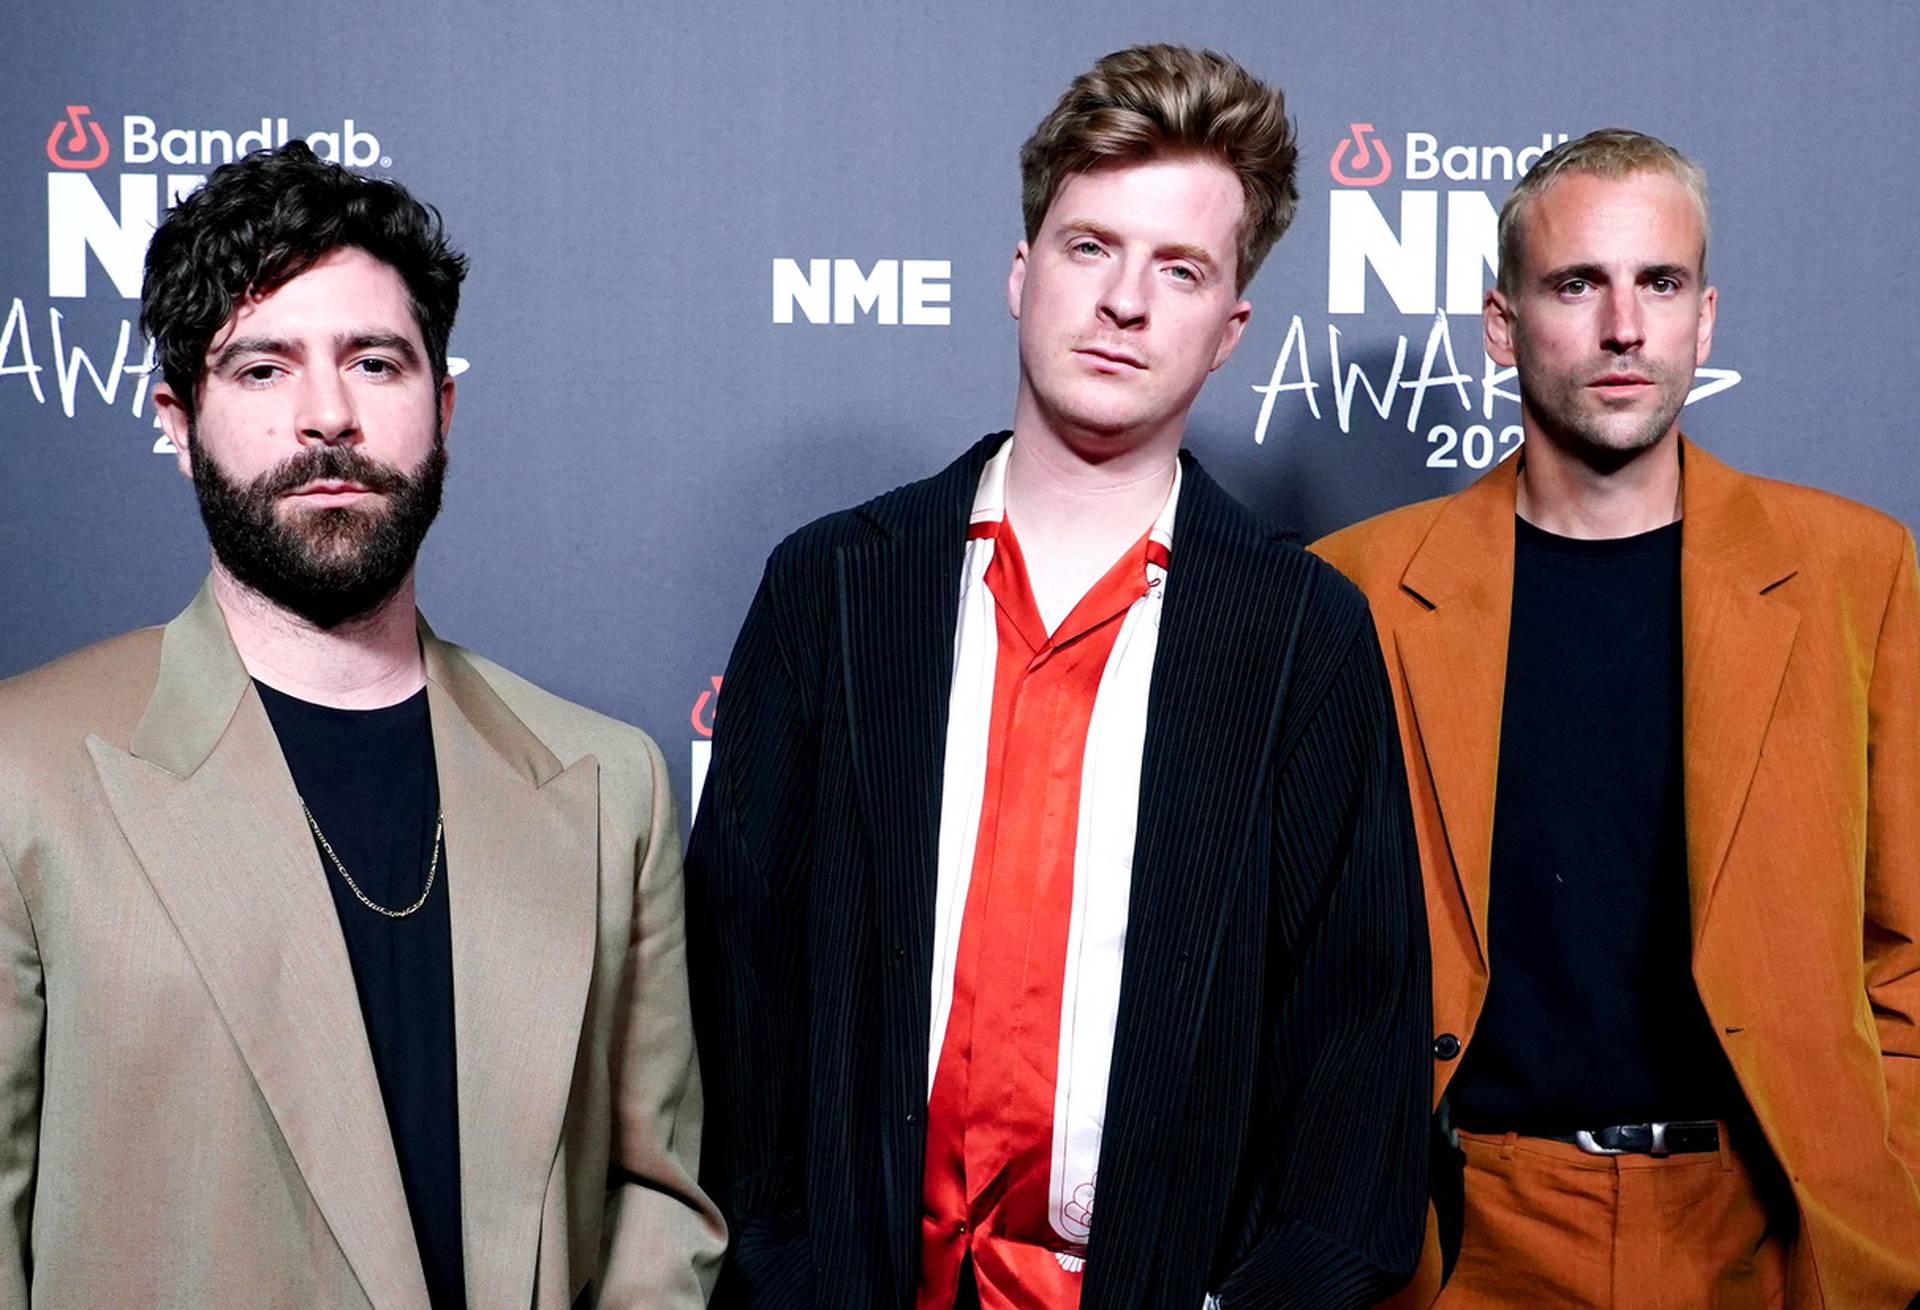 NME Awards 2022 - London